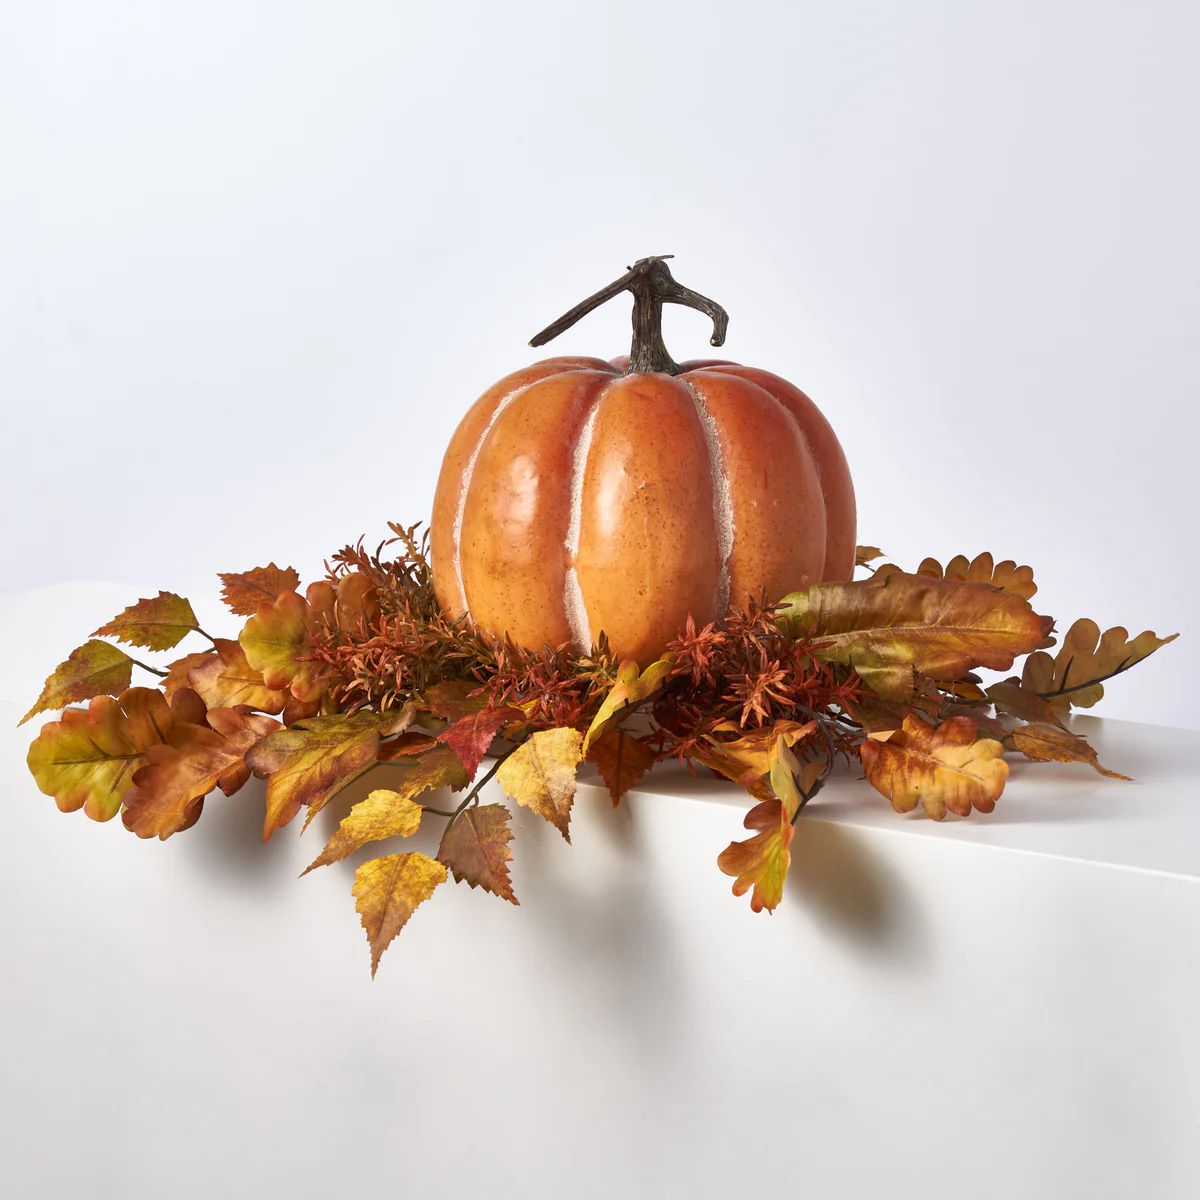 Autumn Harvest Orange Pumpkin Fall Centerpiece with Oak & Birch Mixed Leaves | Darby Creek Trading